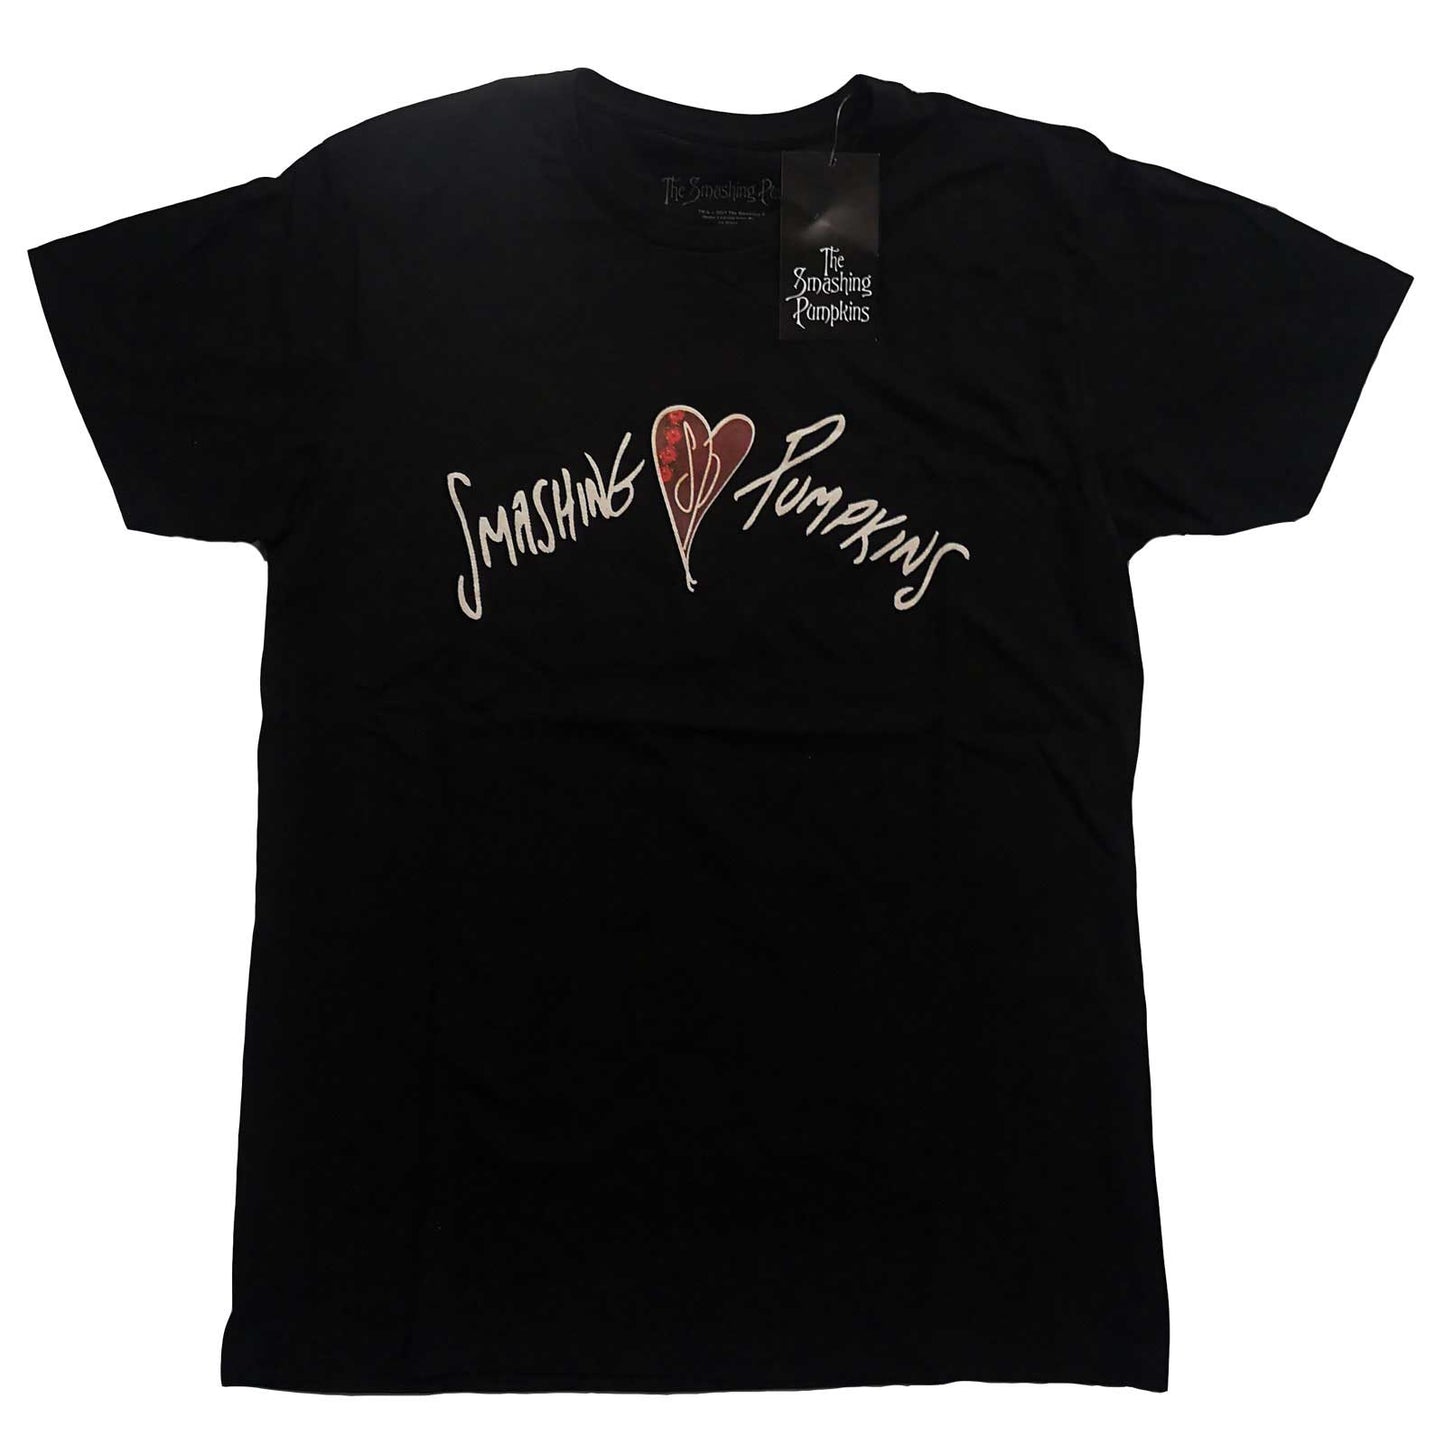 The Smashing Pumpkins T-Shirt - Gish Heart (Unisex)